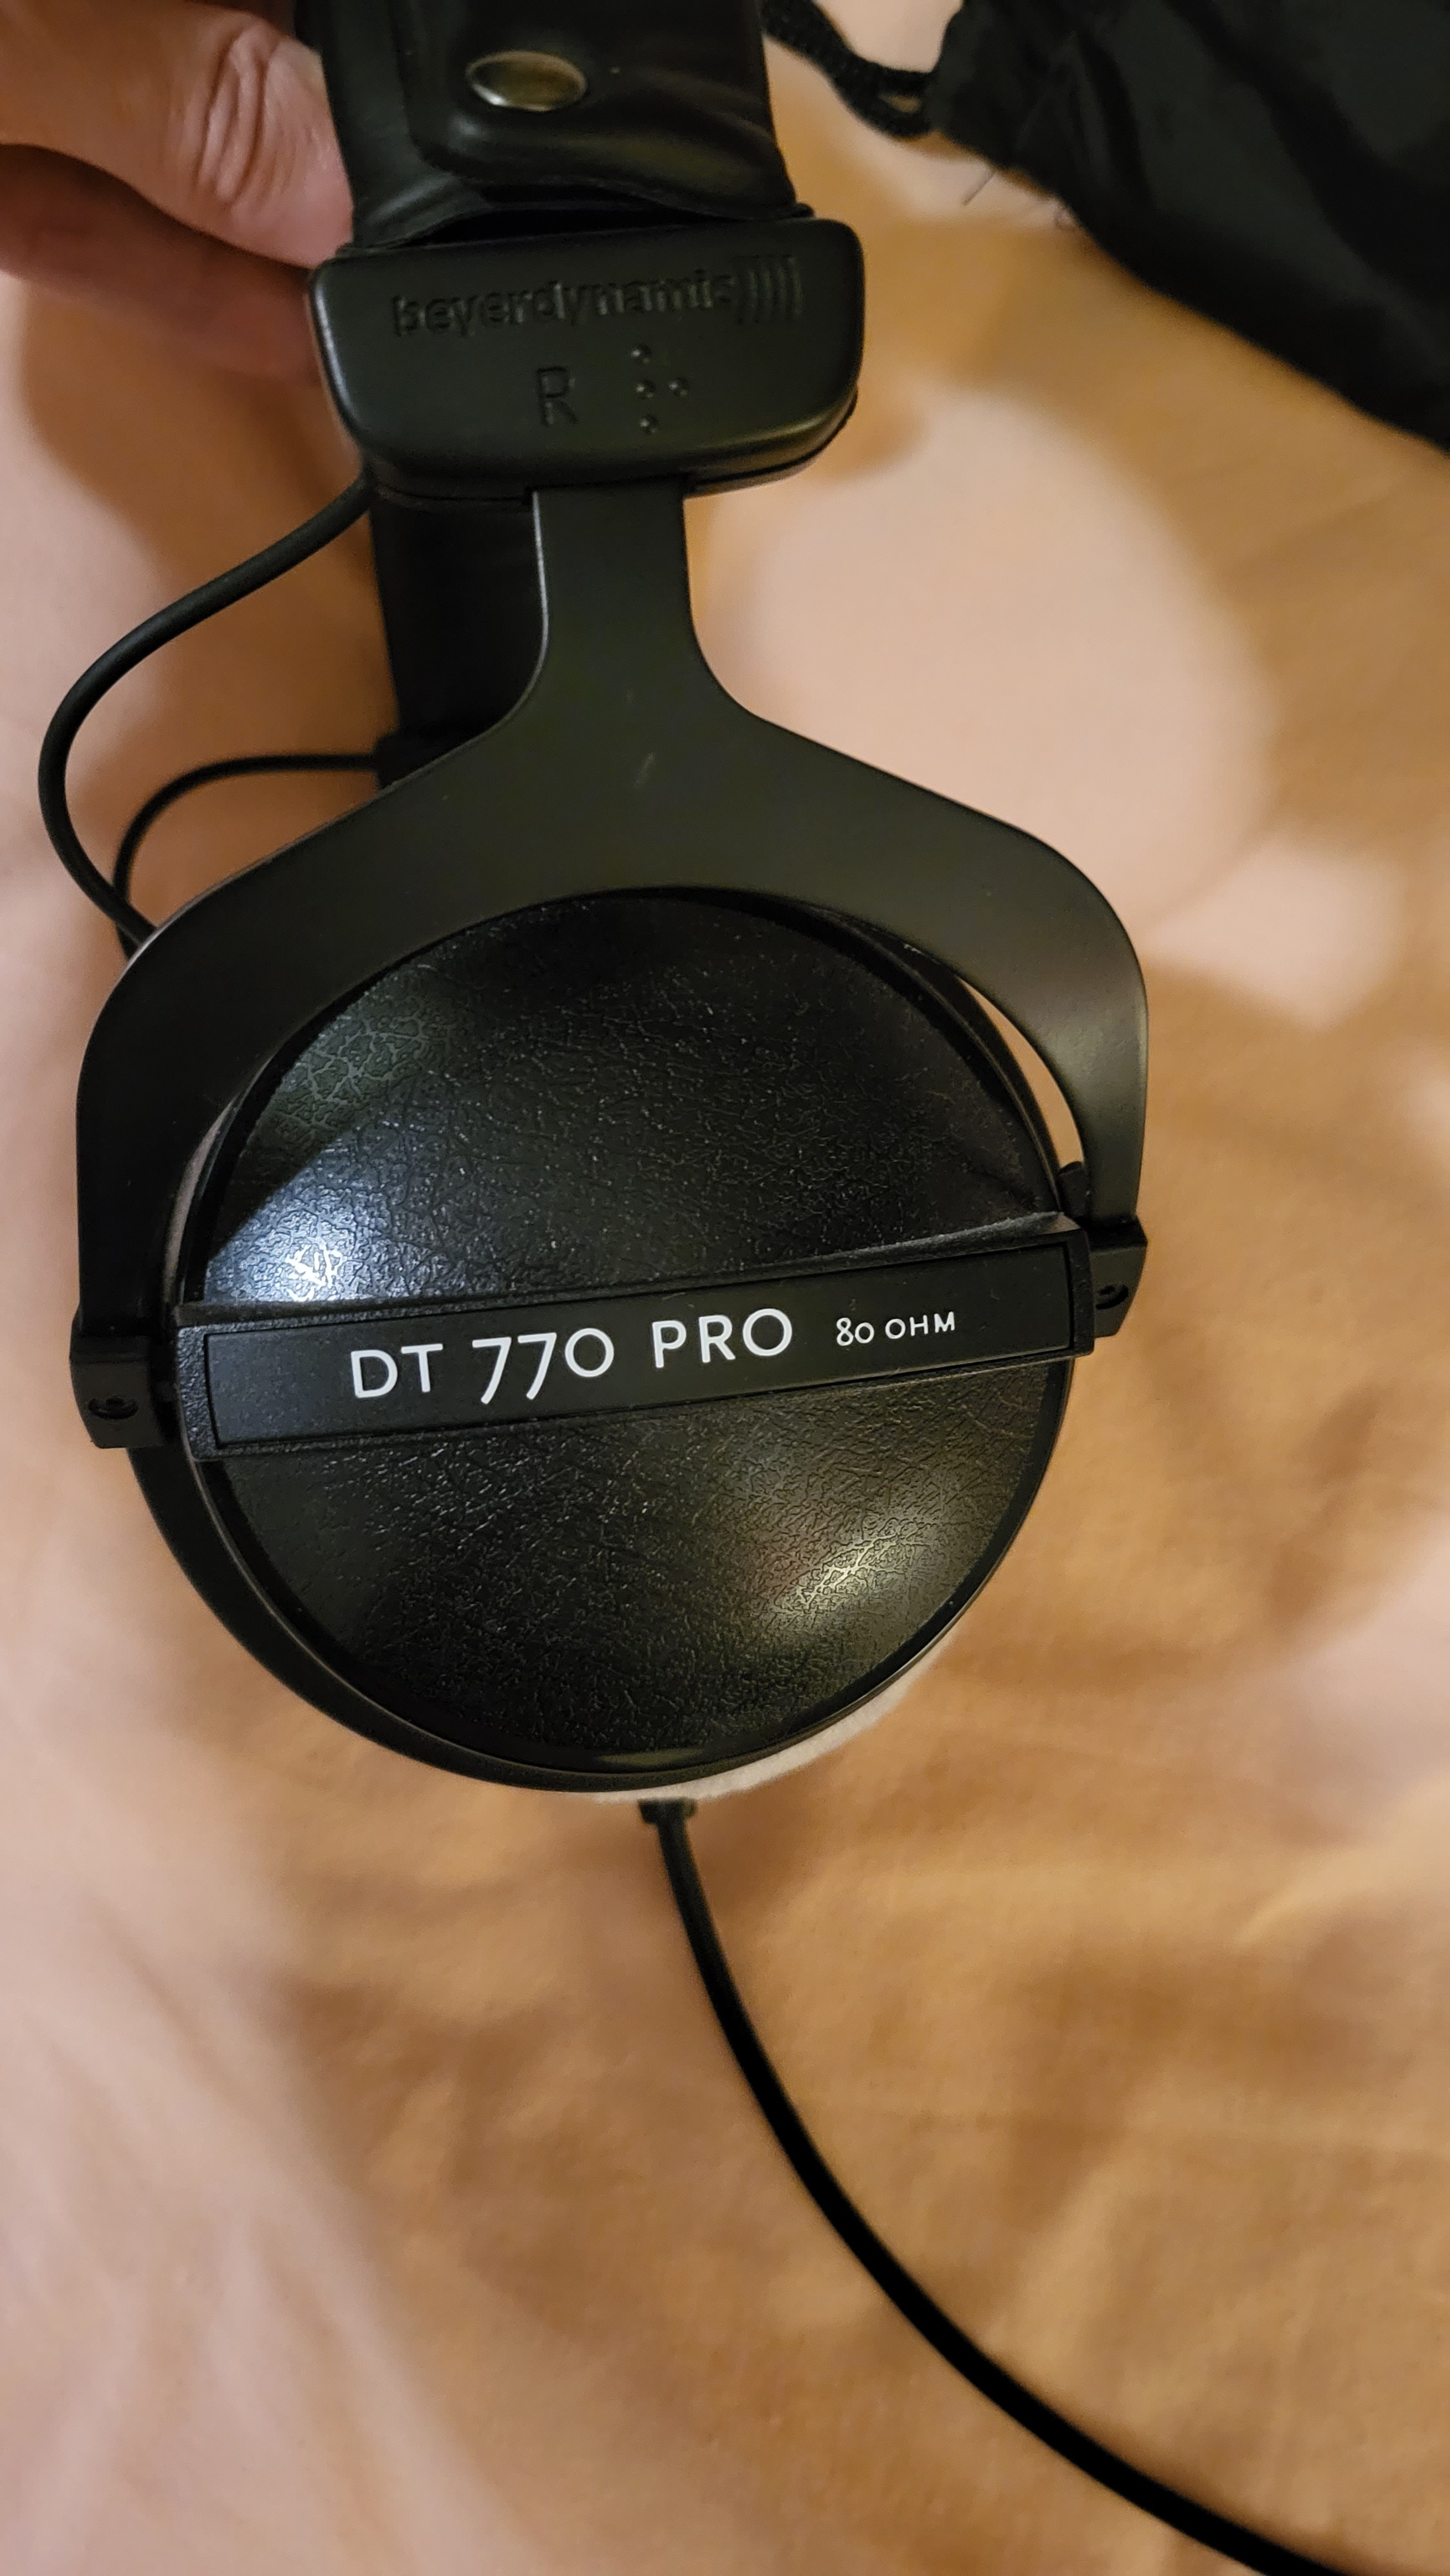 DT 770 Pro 80 Ohms - Beyerdynamic DT 770 Pro 80 Ohms - Audiofanzine